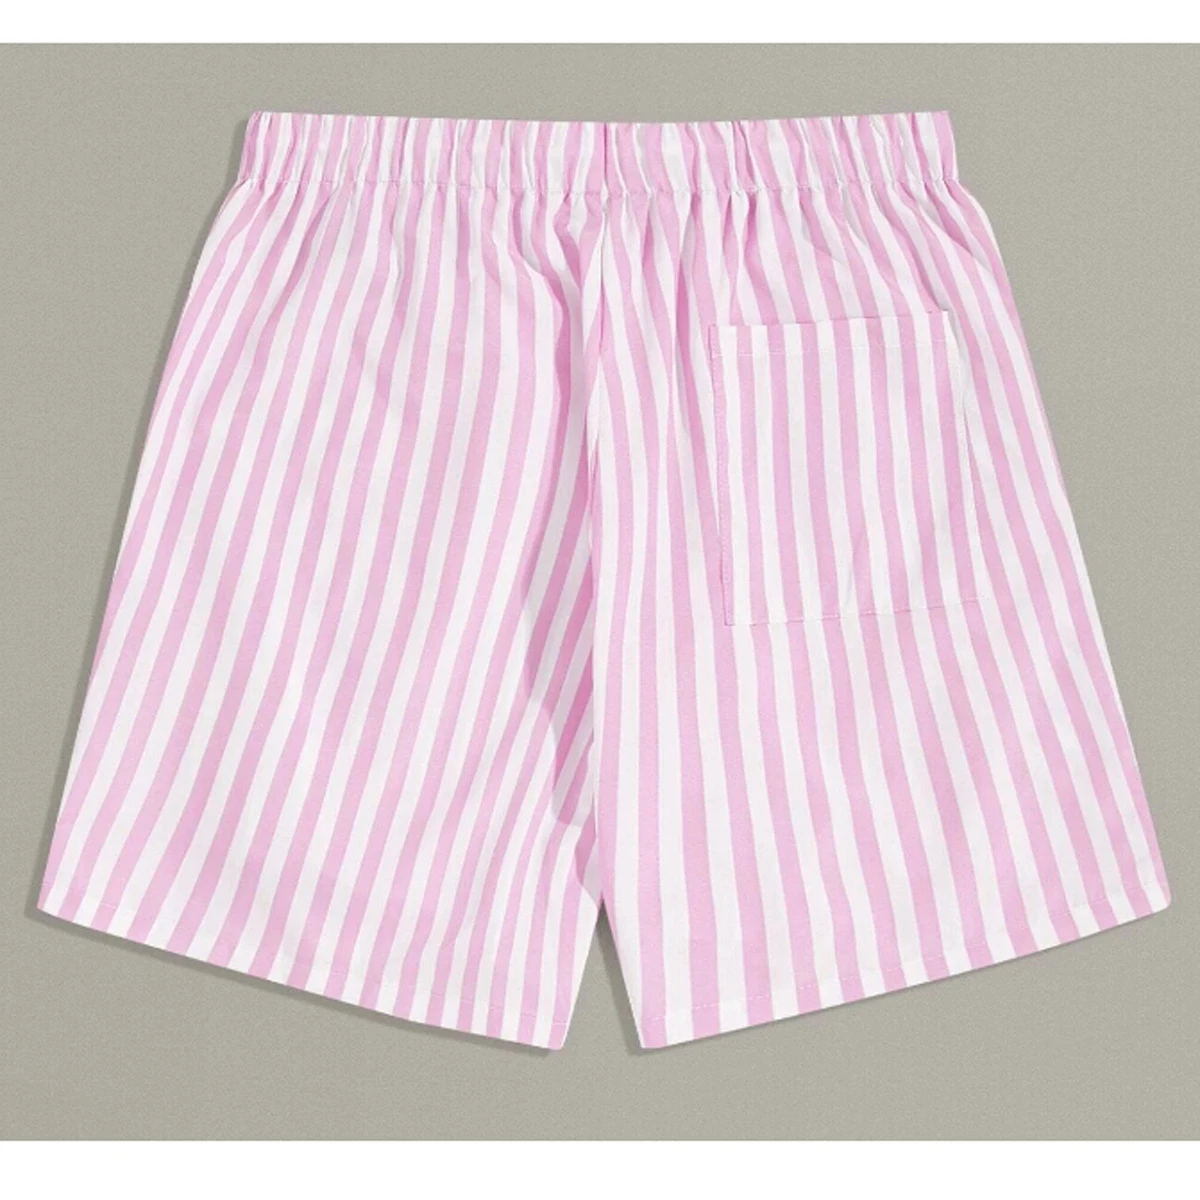 2000 Summer  Men Casual Shorts Blue White Striped Loose Shorts Beach Fashion Male Causal Striped Shorts Plus Size